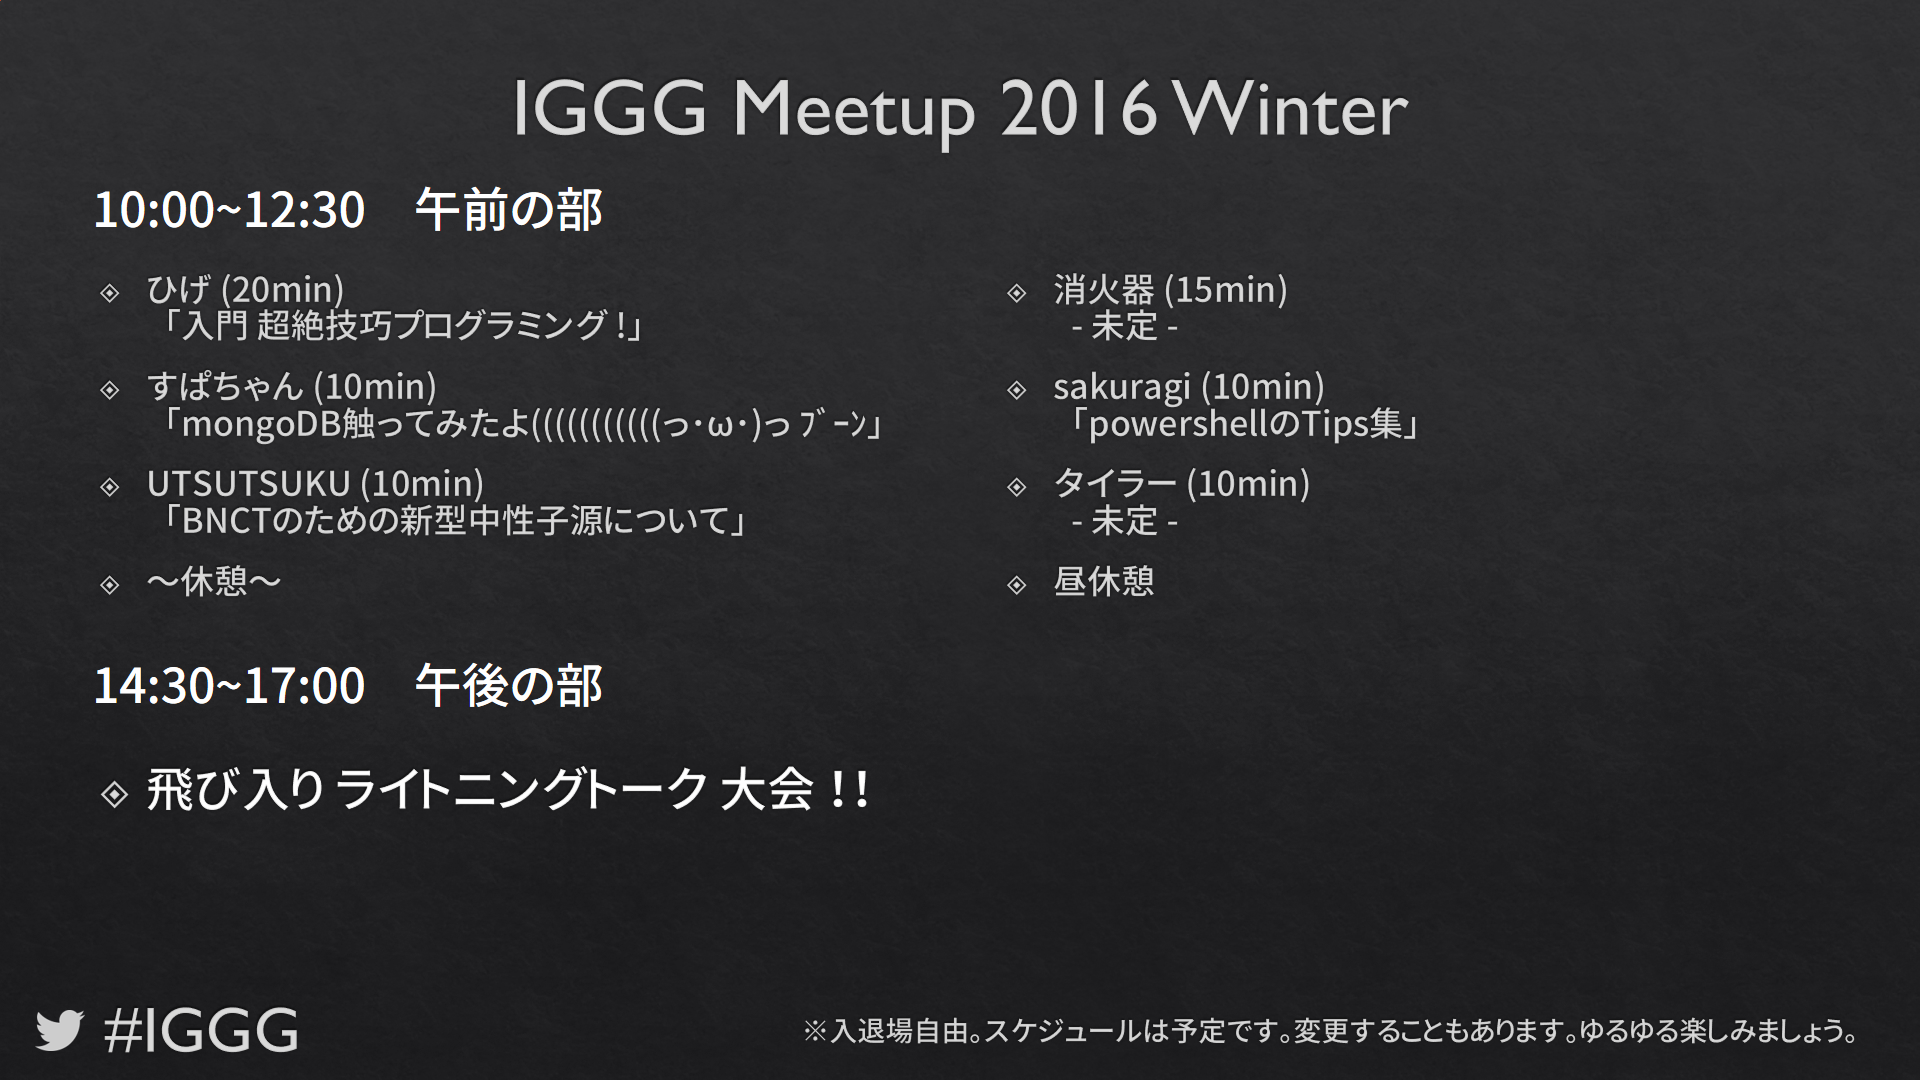 IGGG Meetup 2016 Winter のタイムスケジュール